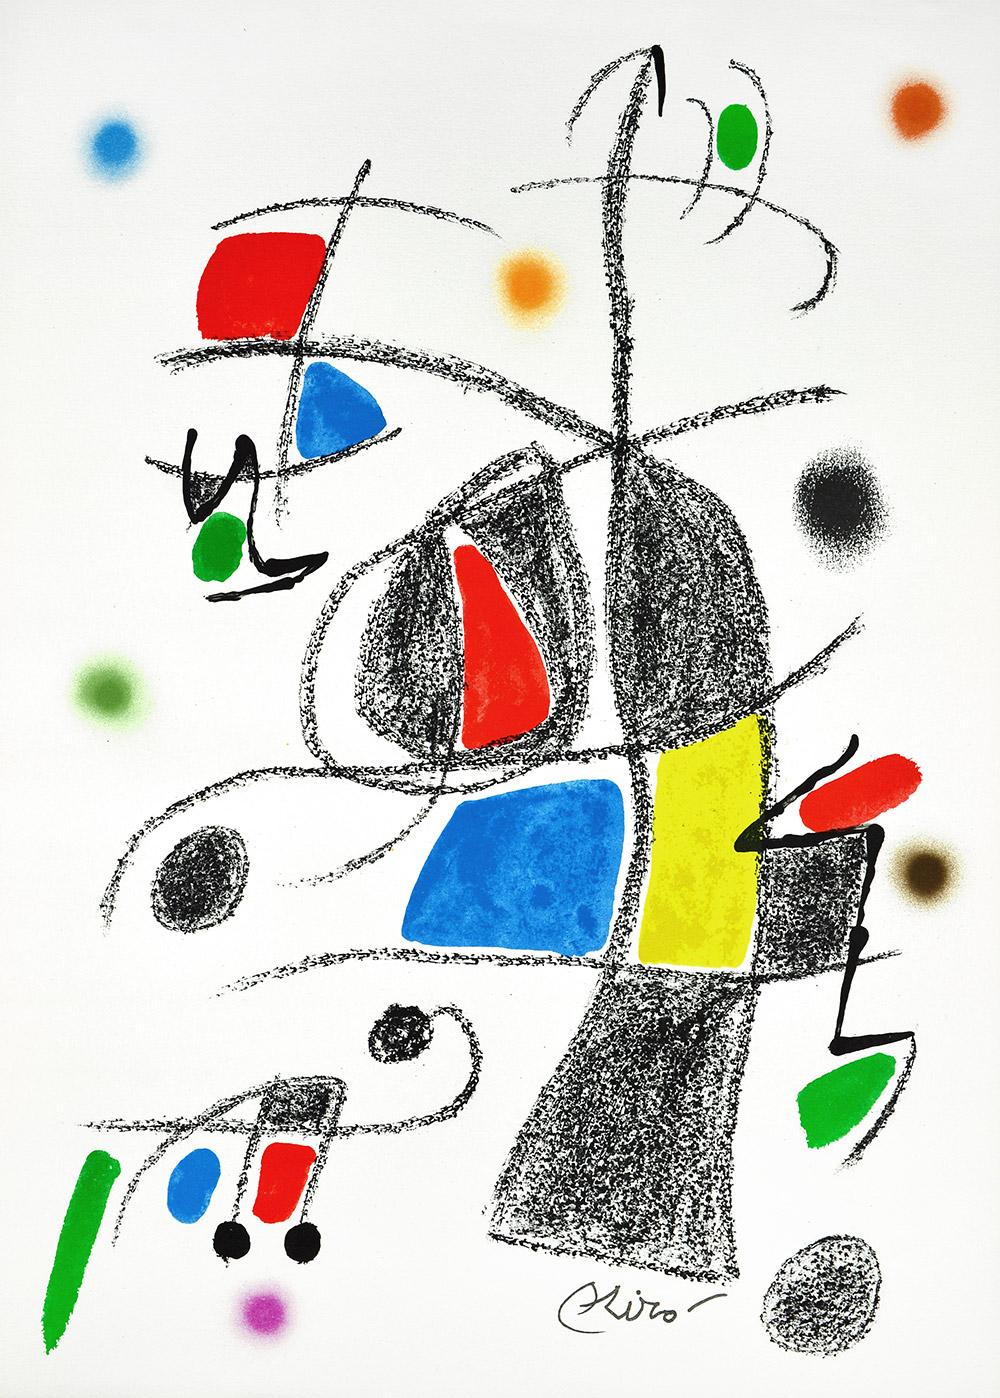 Joan Miró - Maravillas con variaciones acrósticas en el jardín de Miró XVII
Datum der Gründung: 1975
Medium: Lithographie auf Gvarro-Papier
Auflage: 1500
Größe: 49,5 x 35,5 cm
Beobachtungen: Lithographie auf Gvarro-Papierplatte signiert.